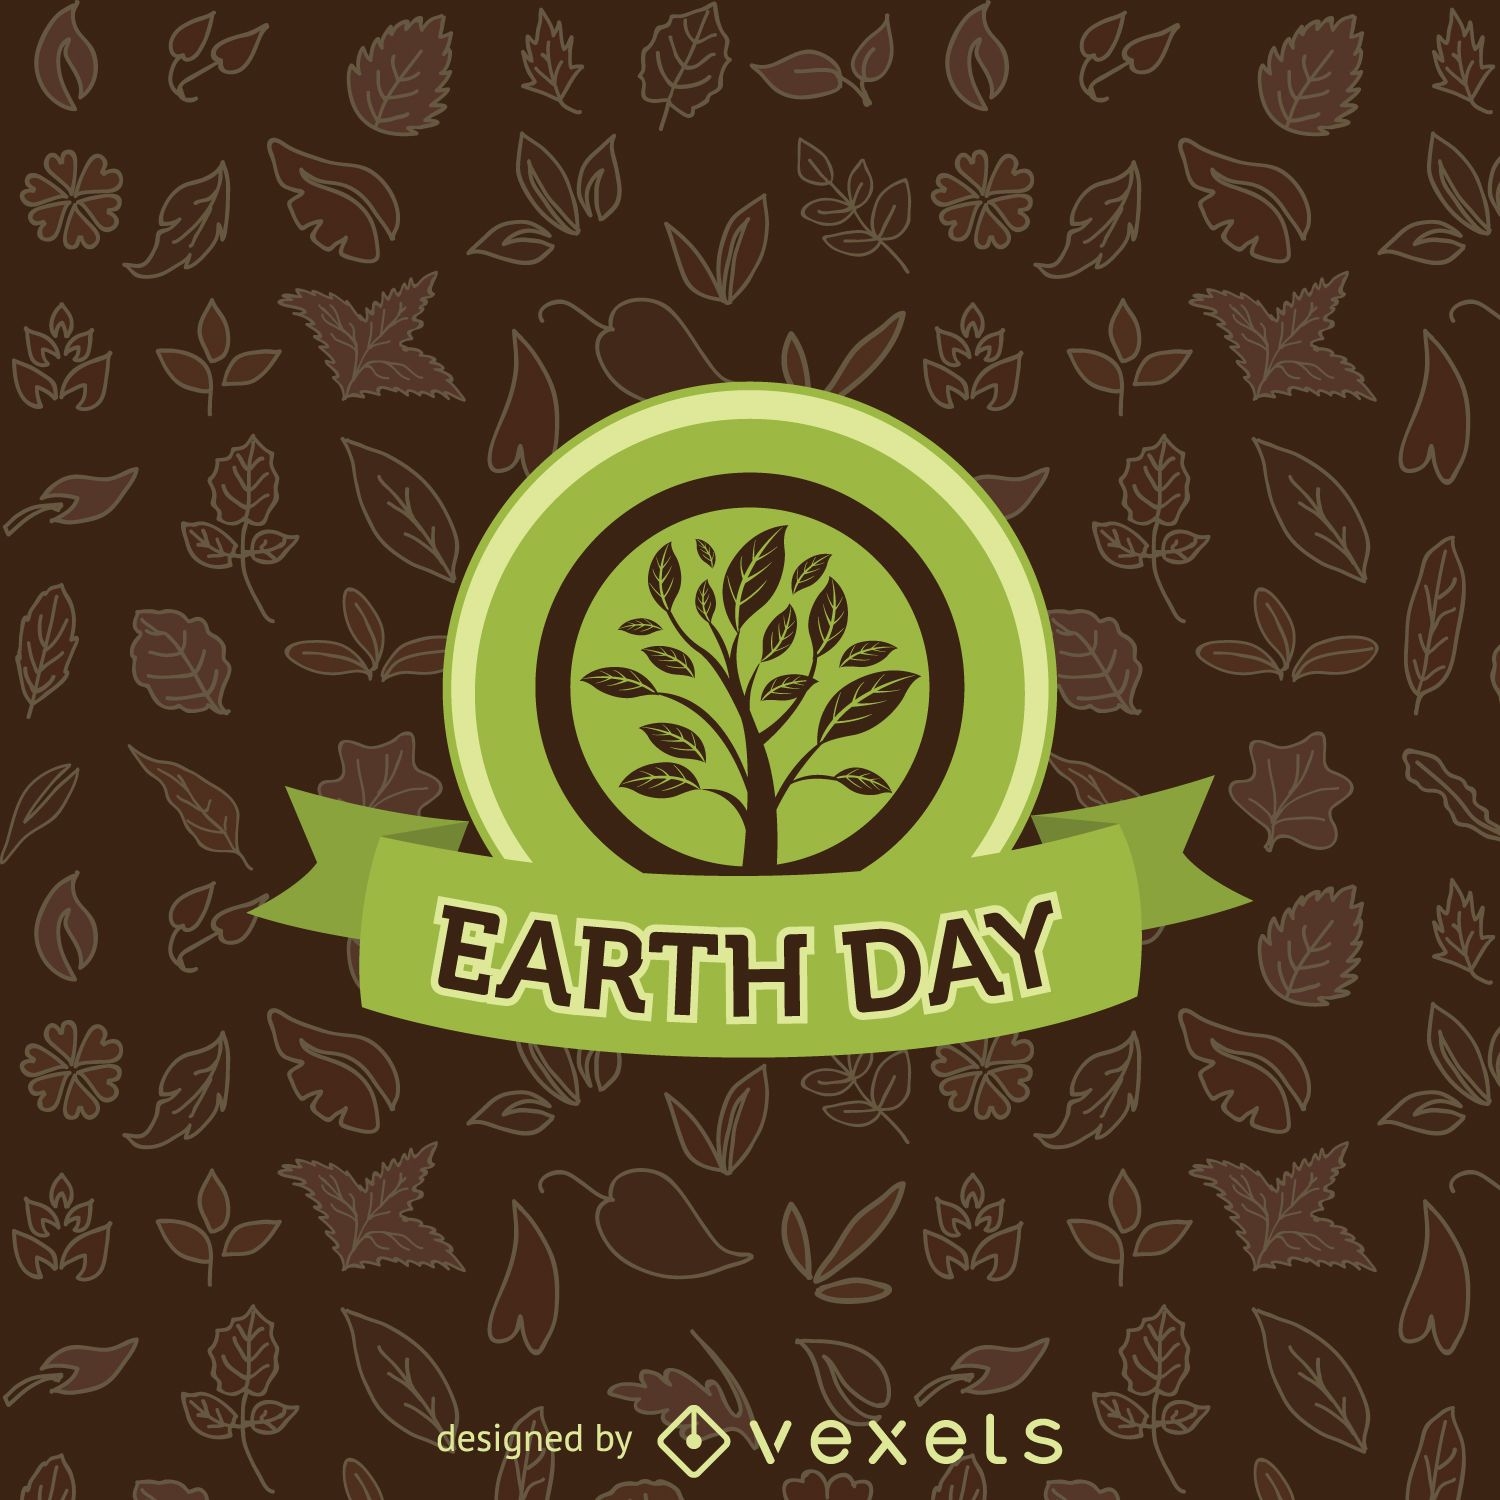 Premium Vector | Earth day 22 april text vector illustration earth day logo  design